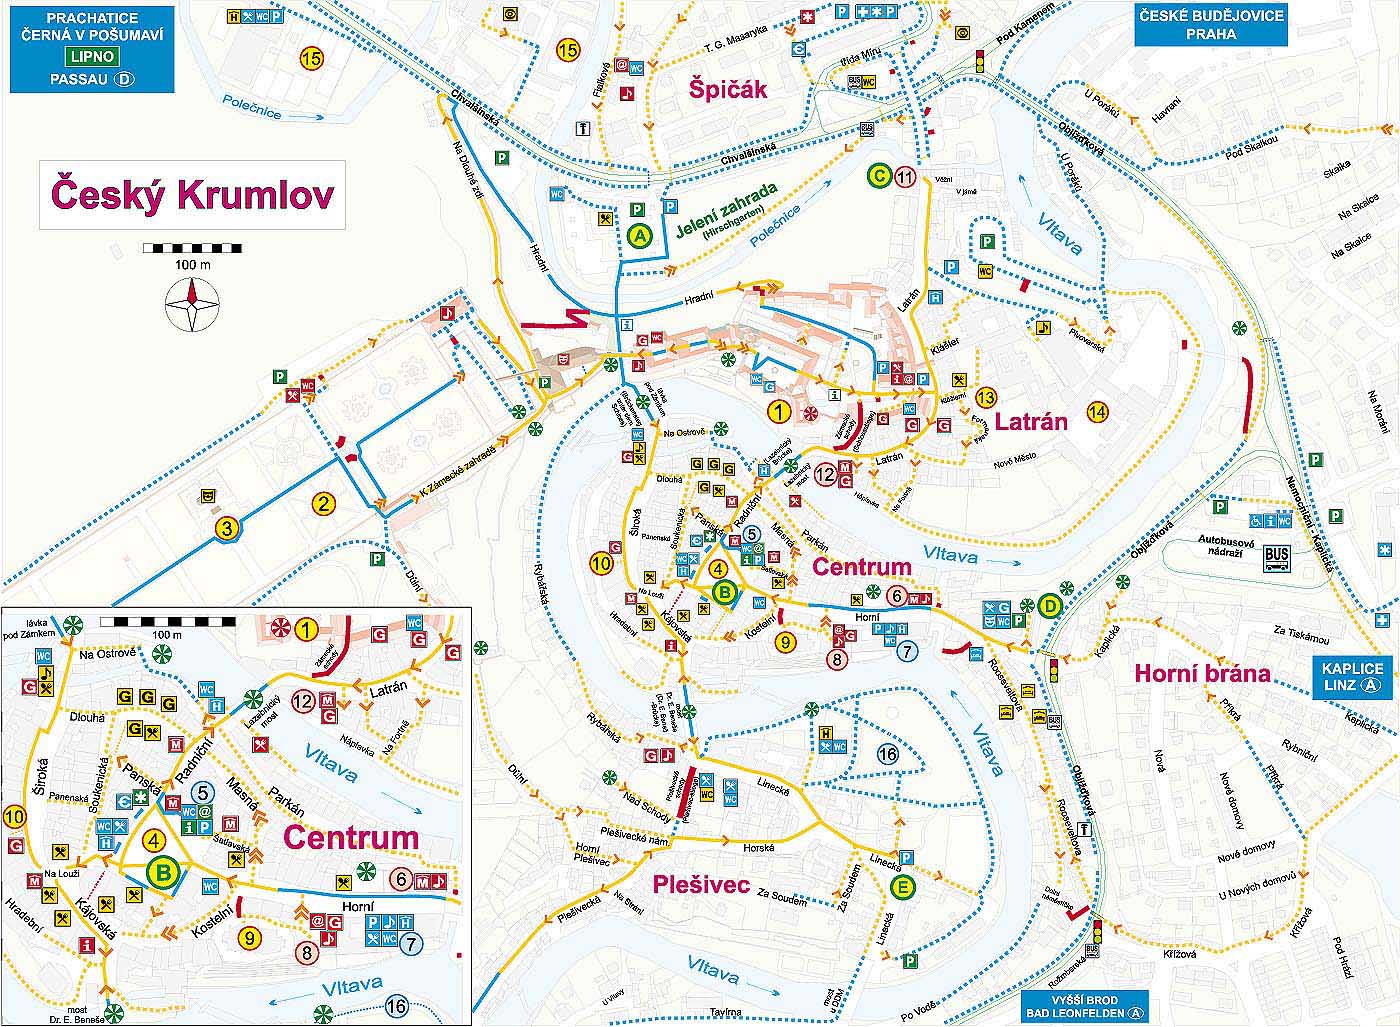 Reiseführer Český Krumlov - auch für Gehbehinderte, die Landkarte der Stadt Český Krumlov